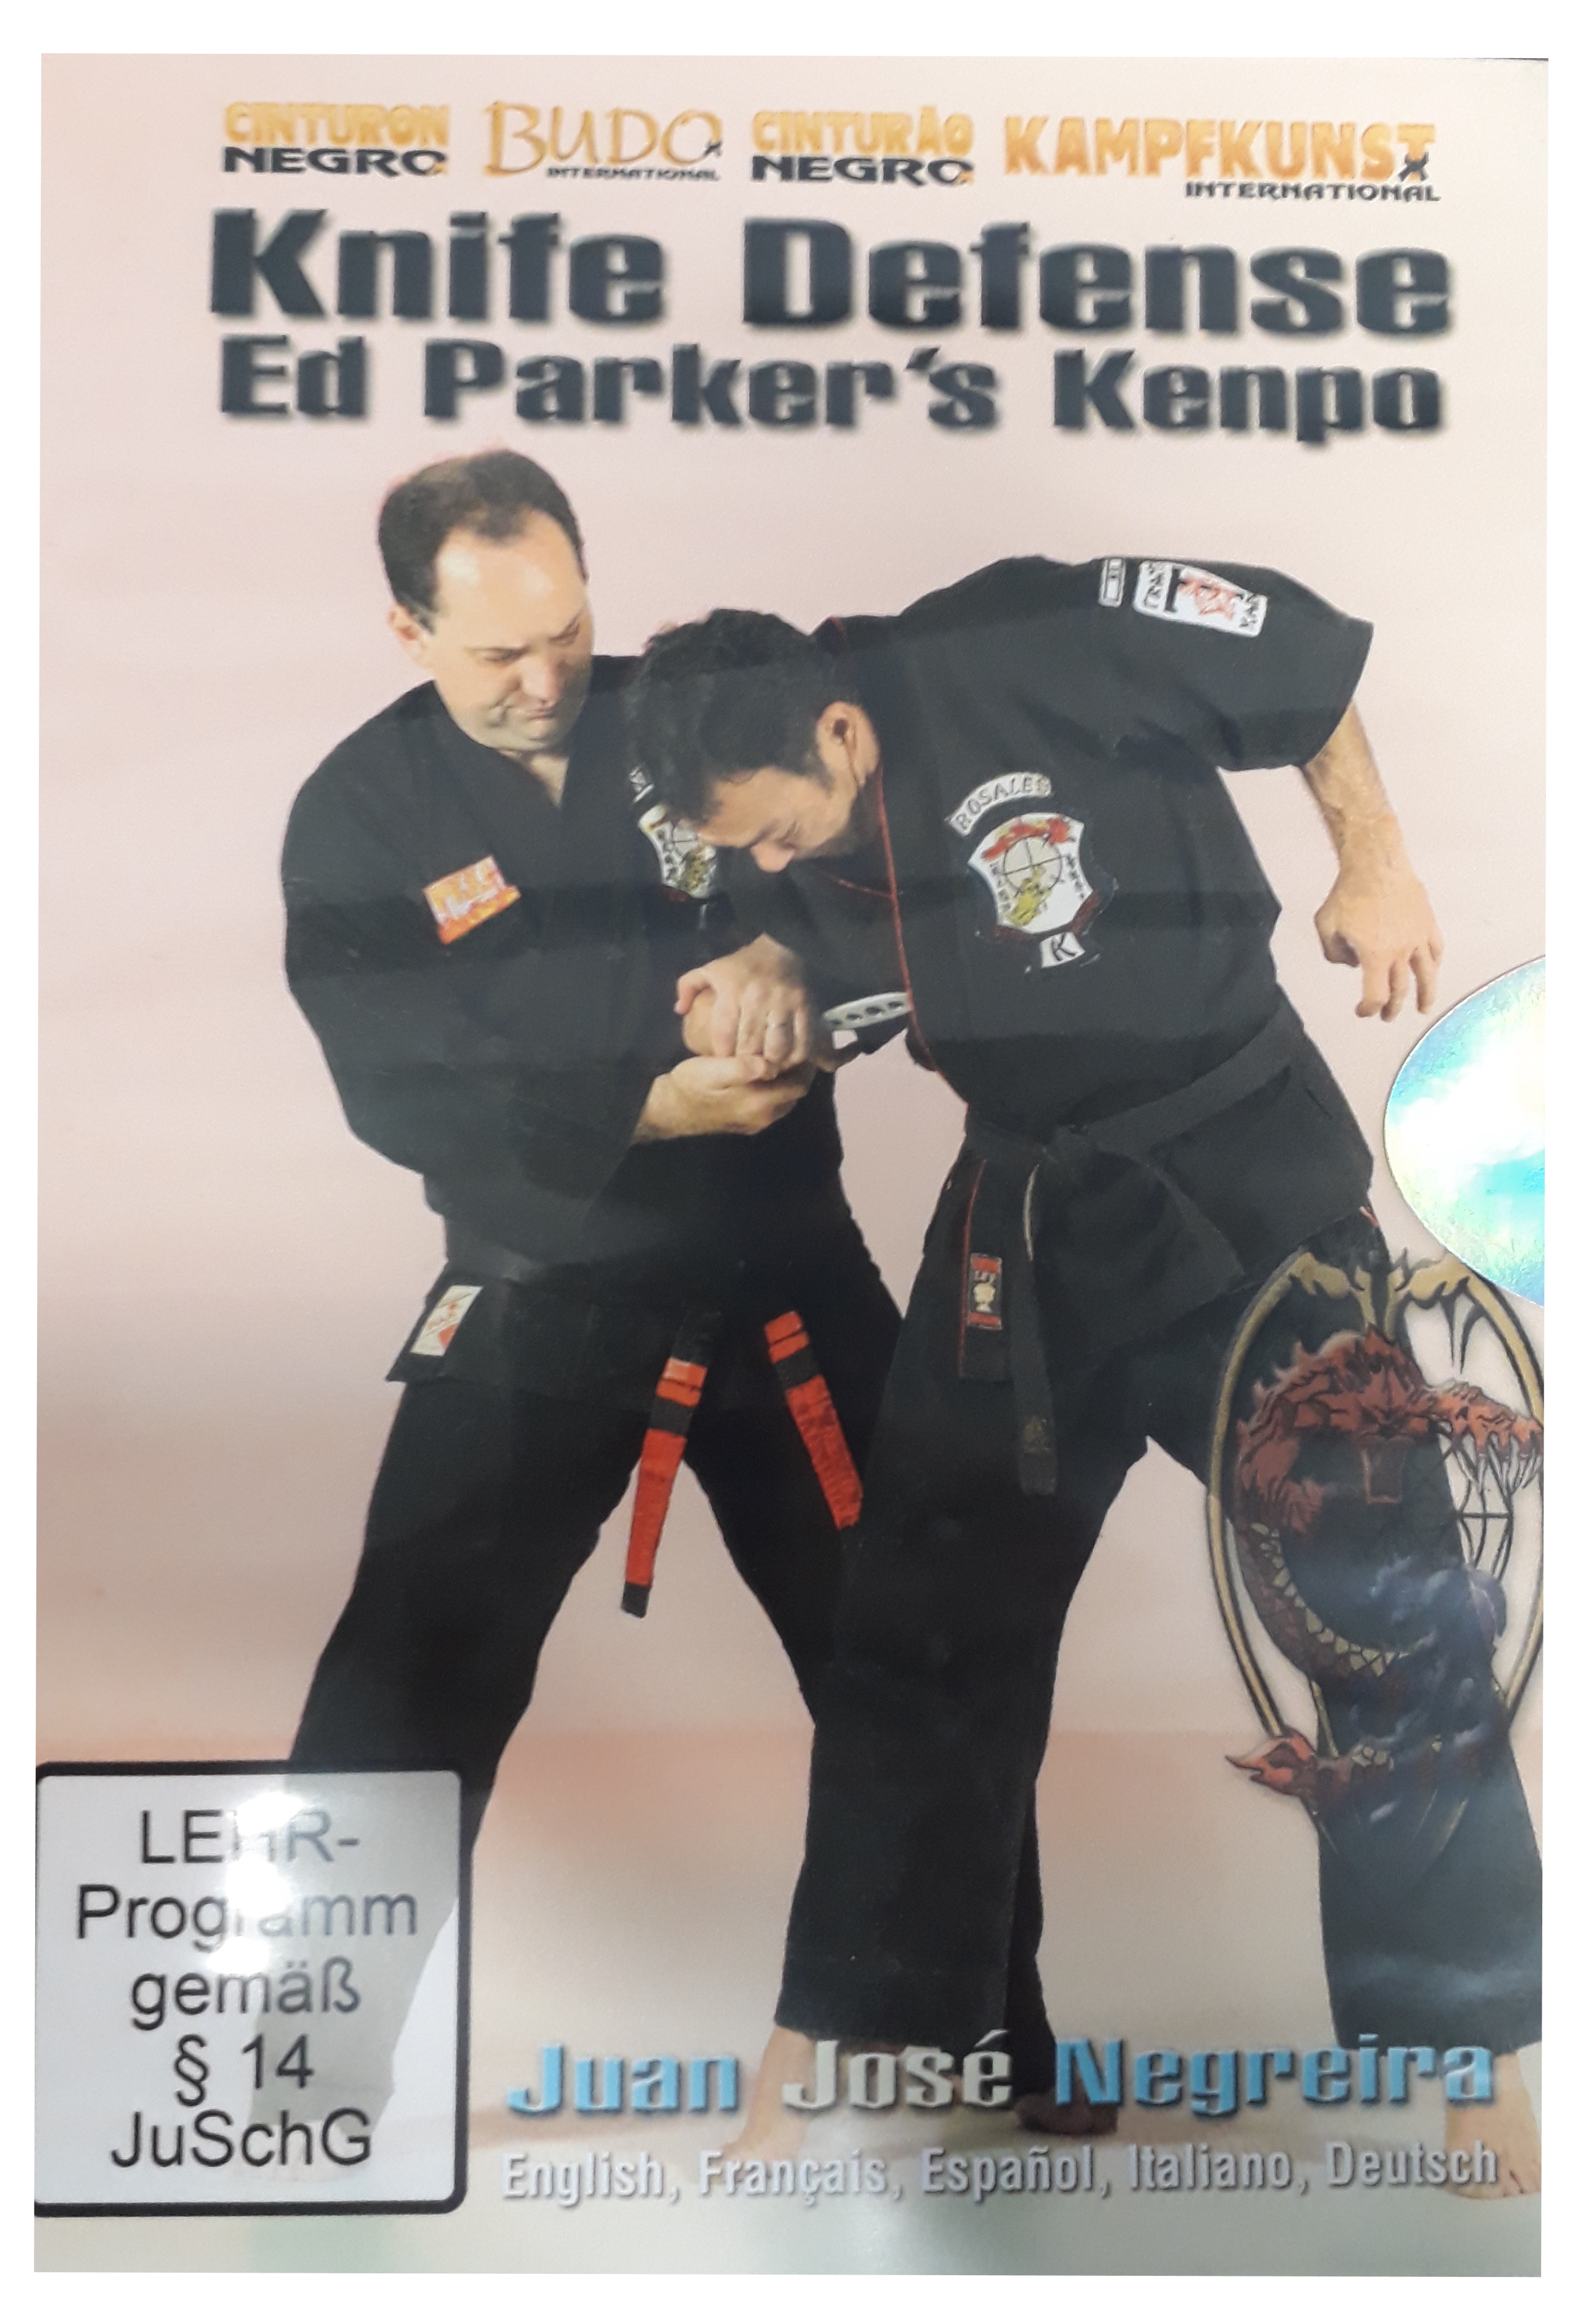 DVD Knife Defense - Ed Parkers Kenpo